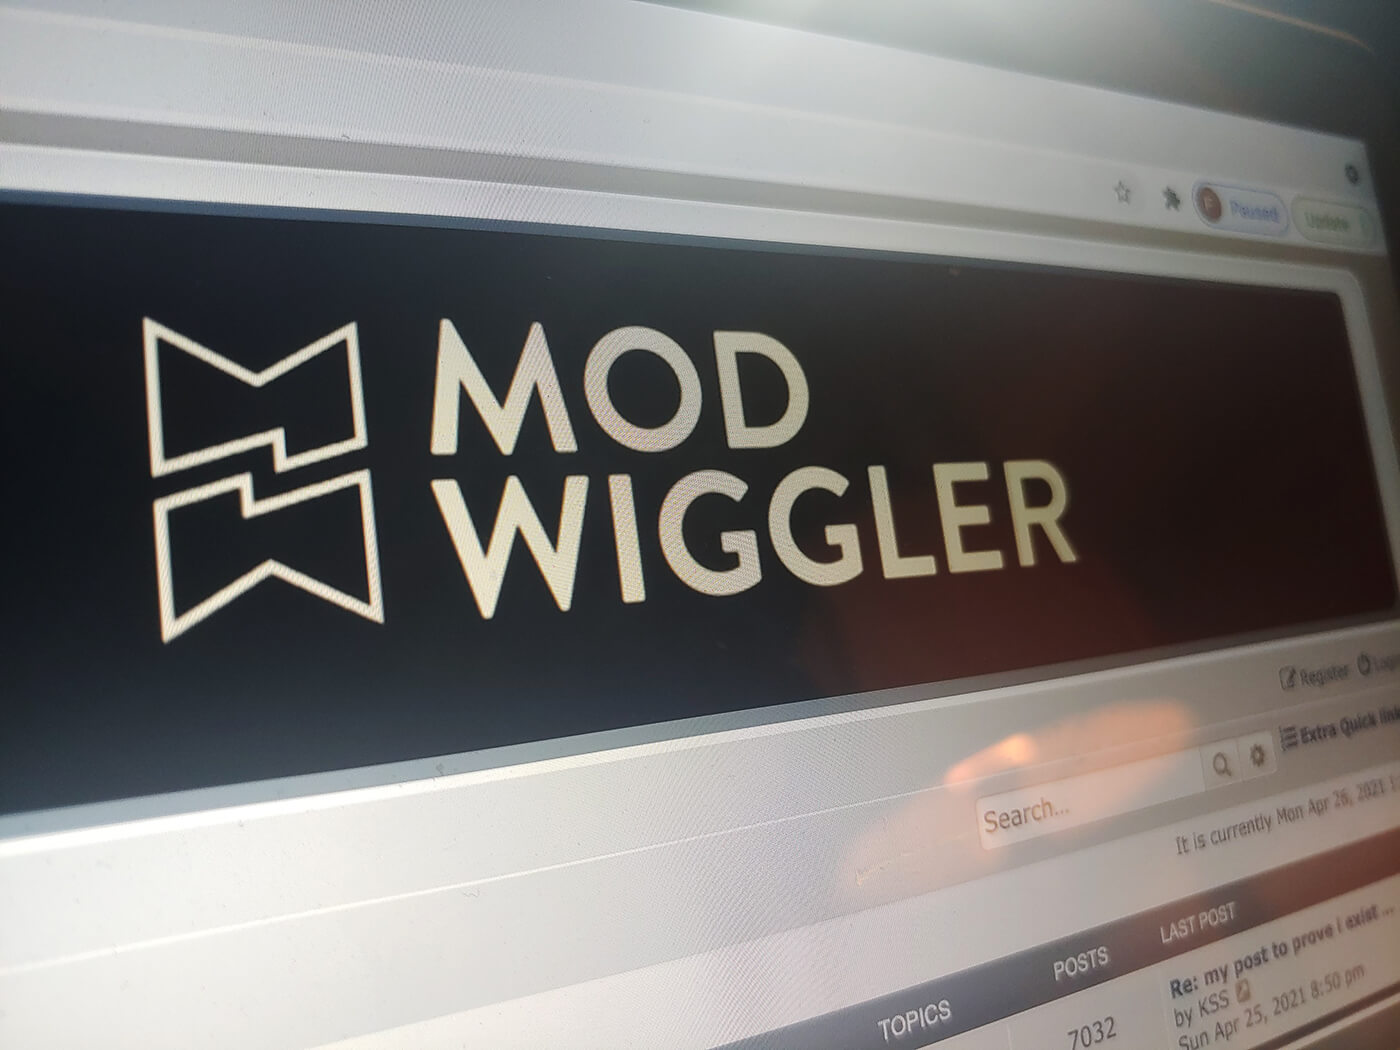 Mod Wiggler home page